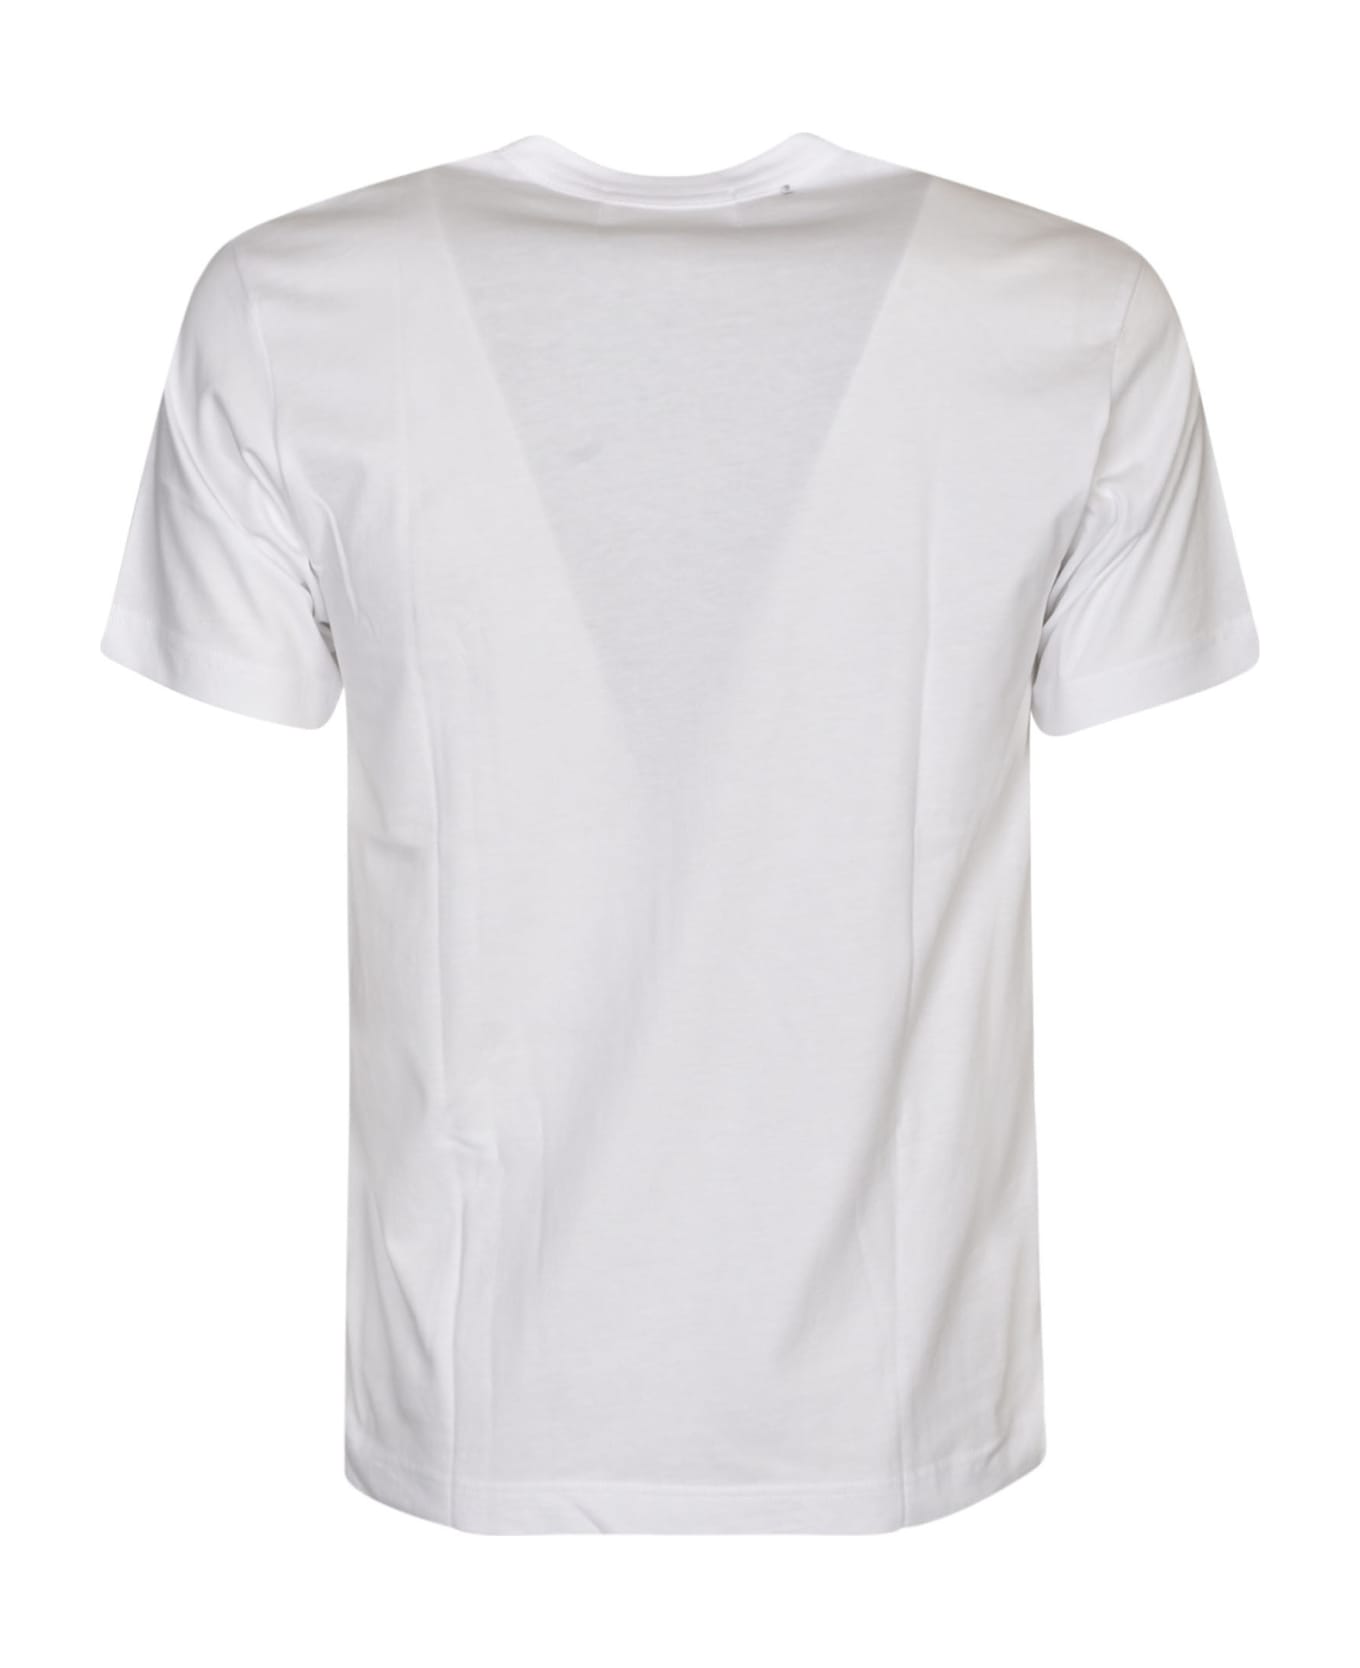 Comme des Garçons Croco Embroidered T-shirt - White シャツ